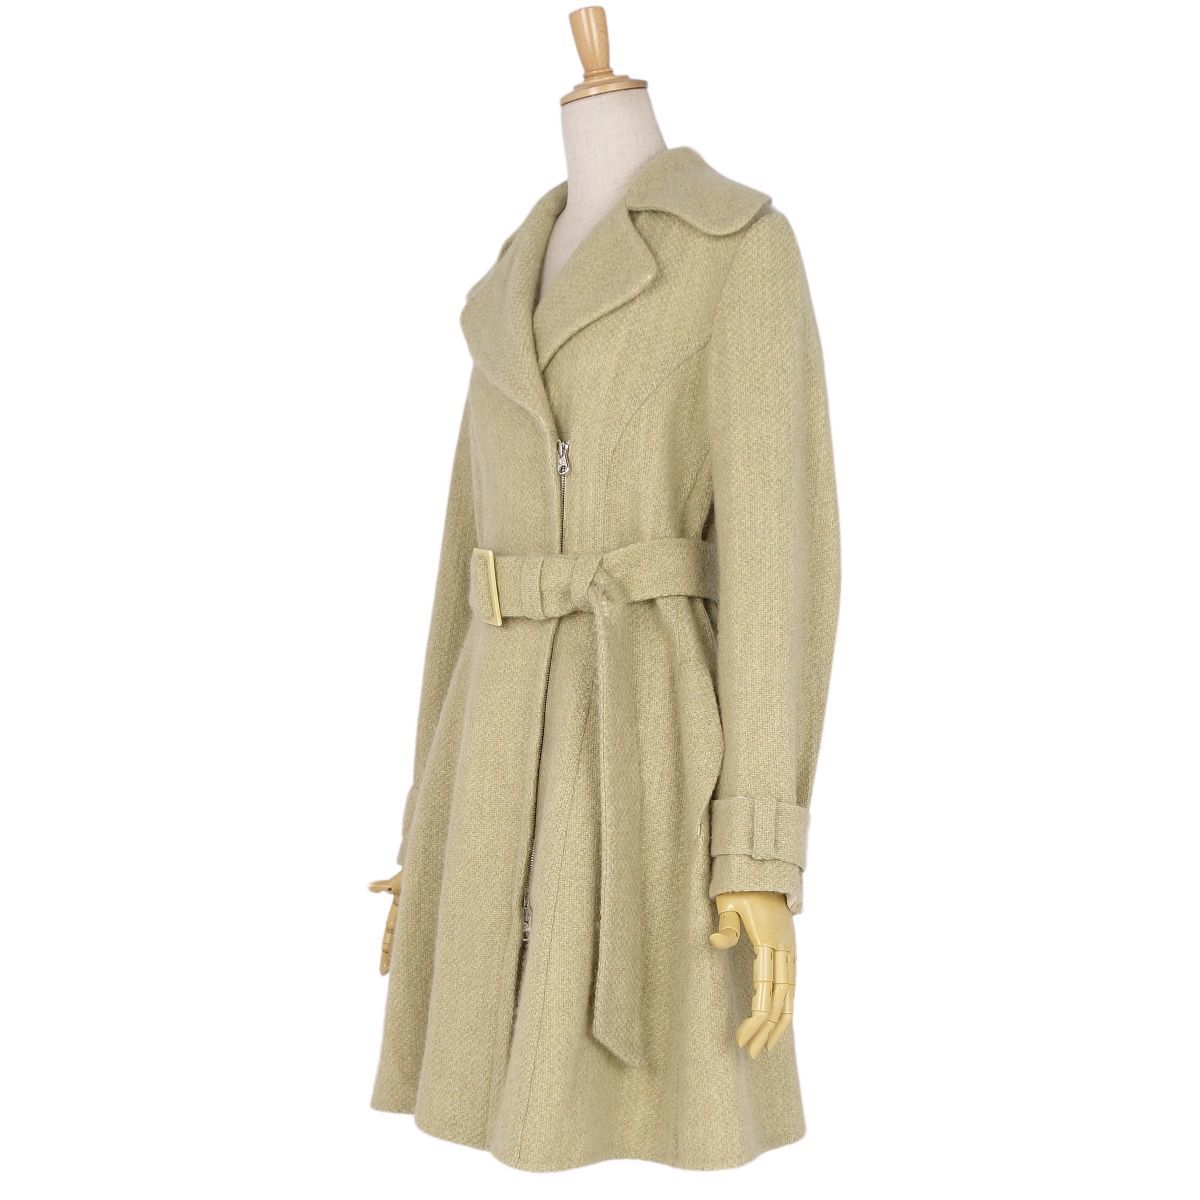 joru geo Armani GIORGIO ARMANI coat trench coat Zip up cashmere silk outer lady's 40 cg10ml-rm08f06495